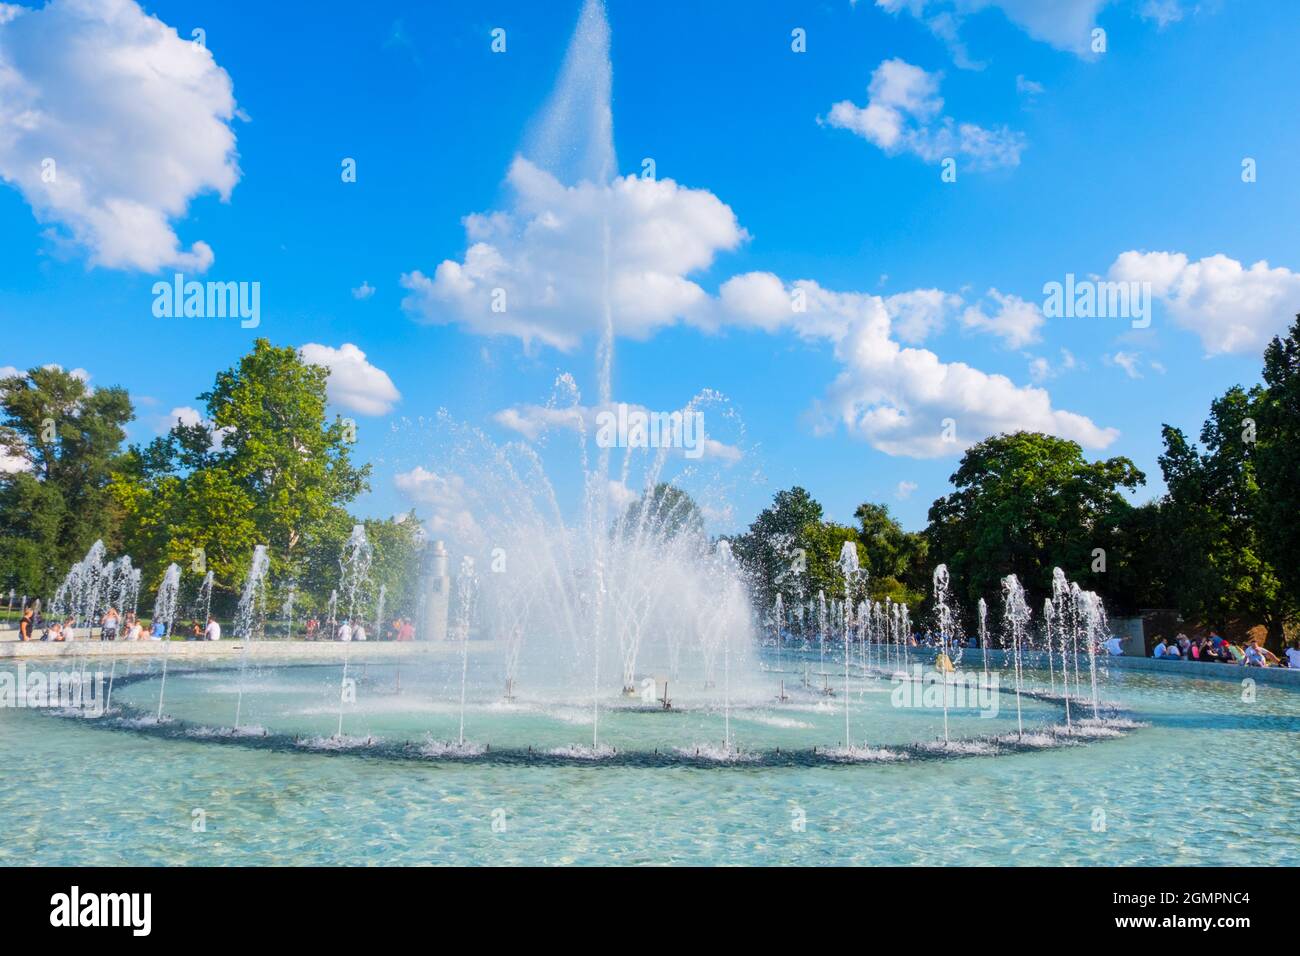 Multimedialny Park Fontann, Multimedia Fountain Park, Skwer 1 Dywizji Pancernej WP, Varsavia, Polonia Foto Stock